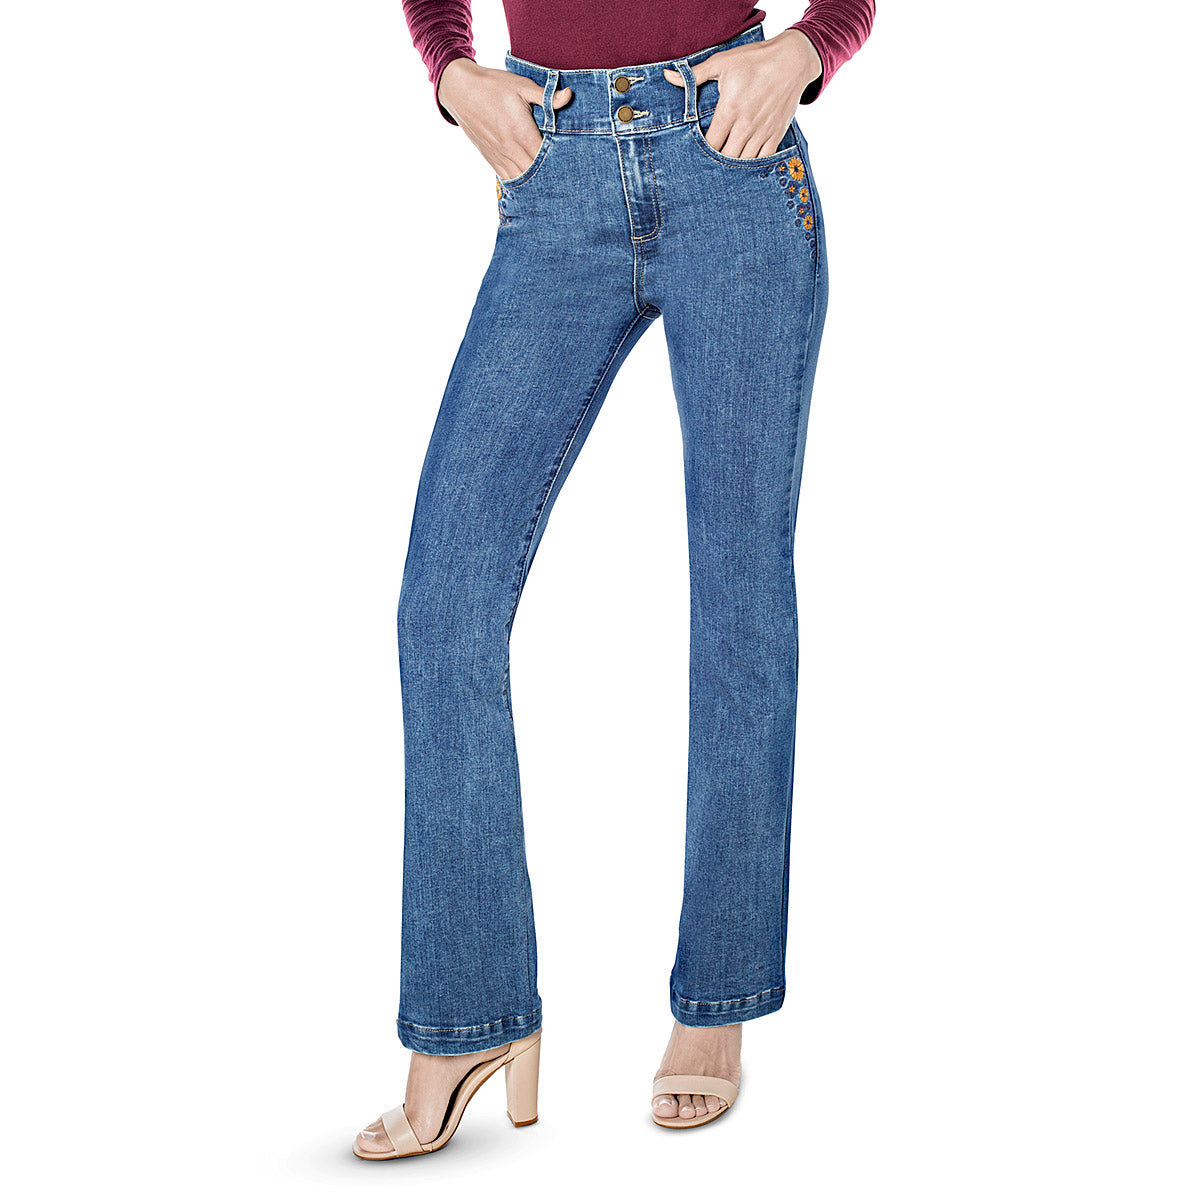 Pakar.com - Mayo: Regalos para mamá | Jeans para mujer cod-121740